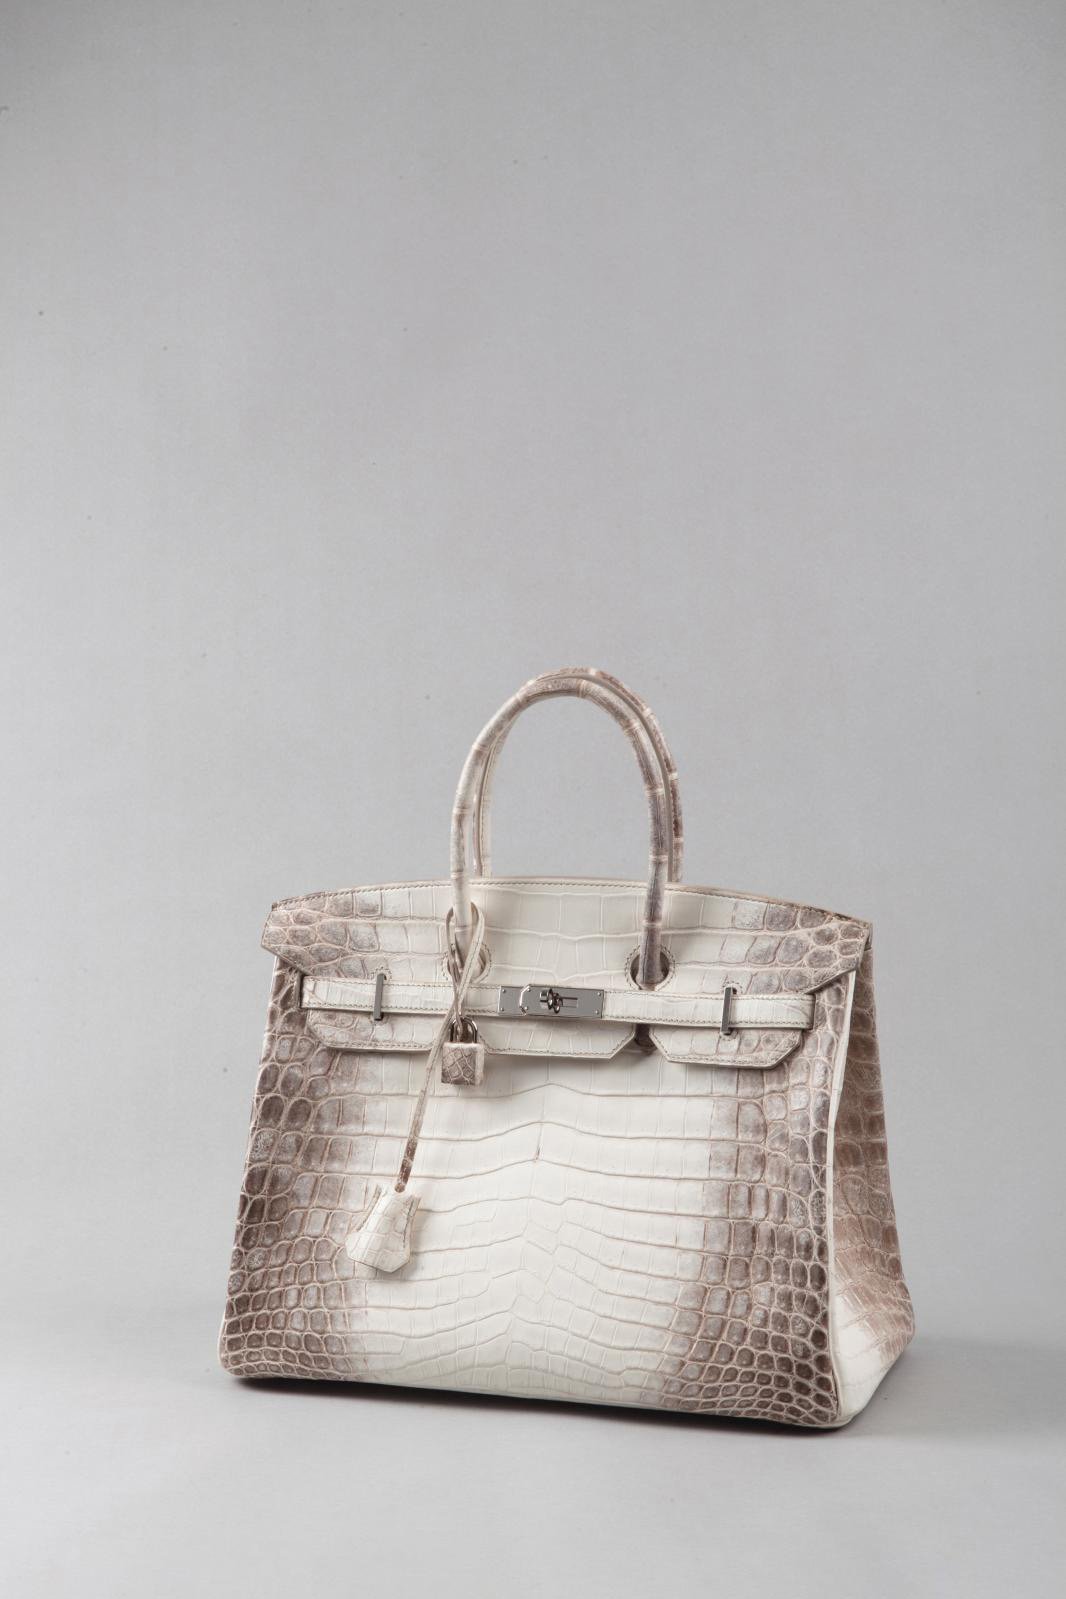 Birkin by Hermès: Business Is in the Bag